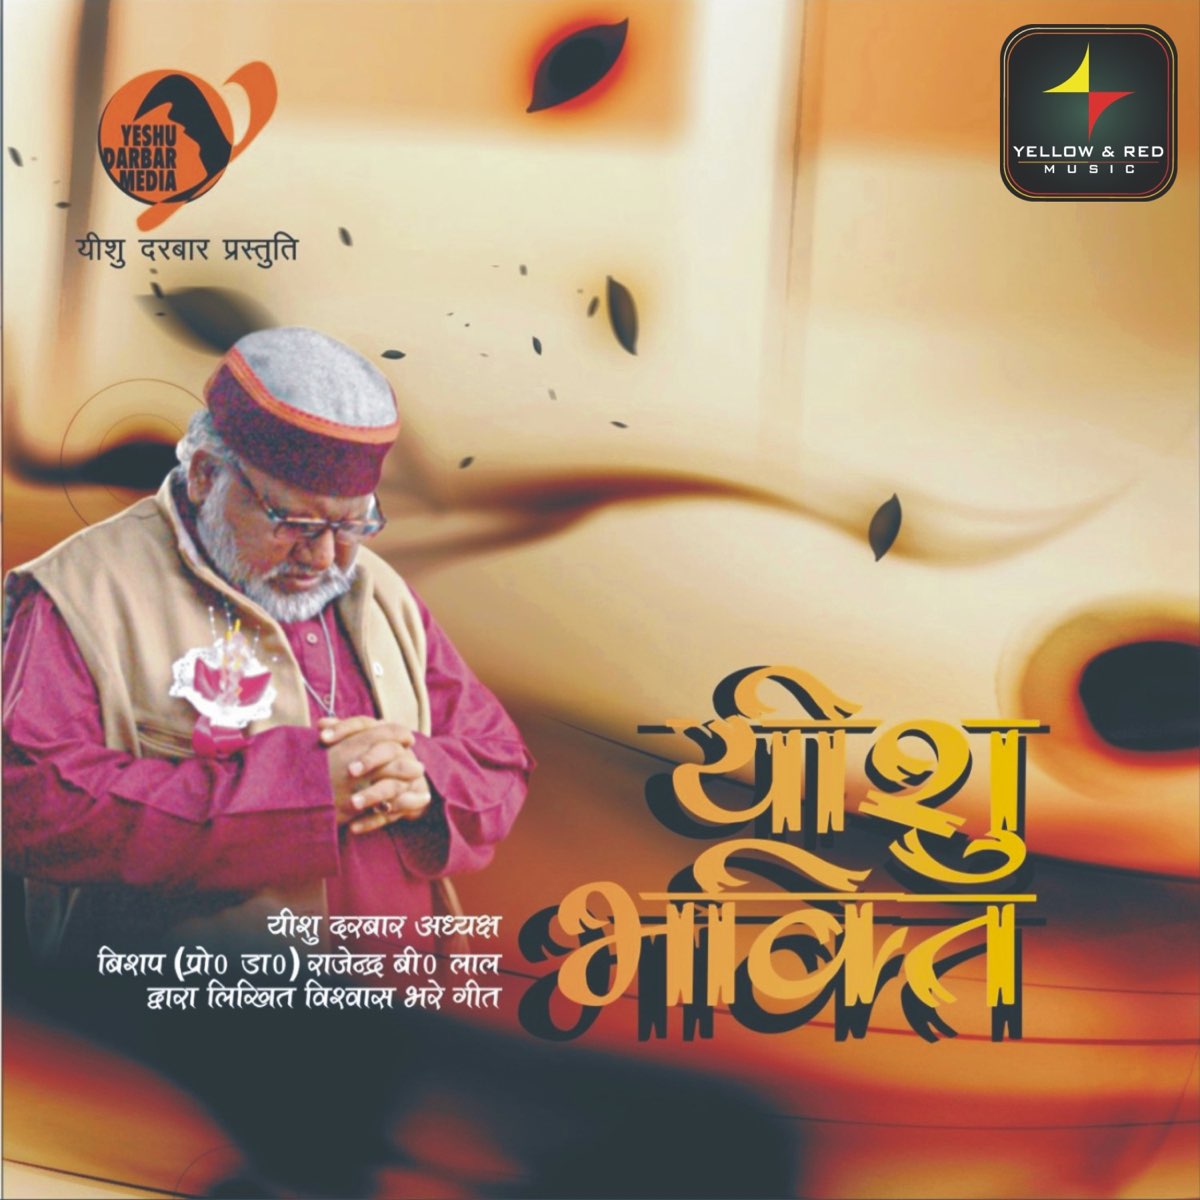 Yeshu Bhakti by Various Artists on Apple Music